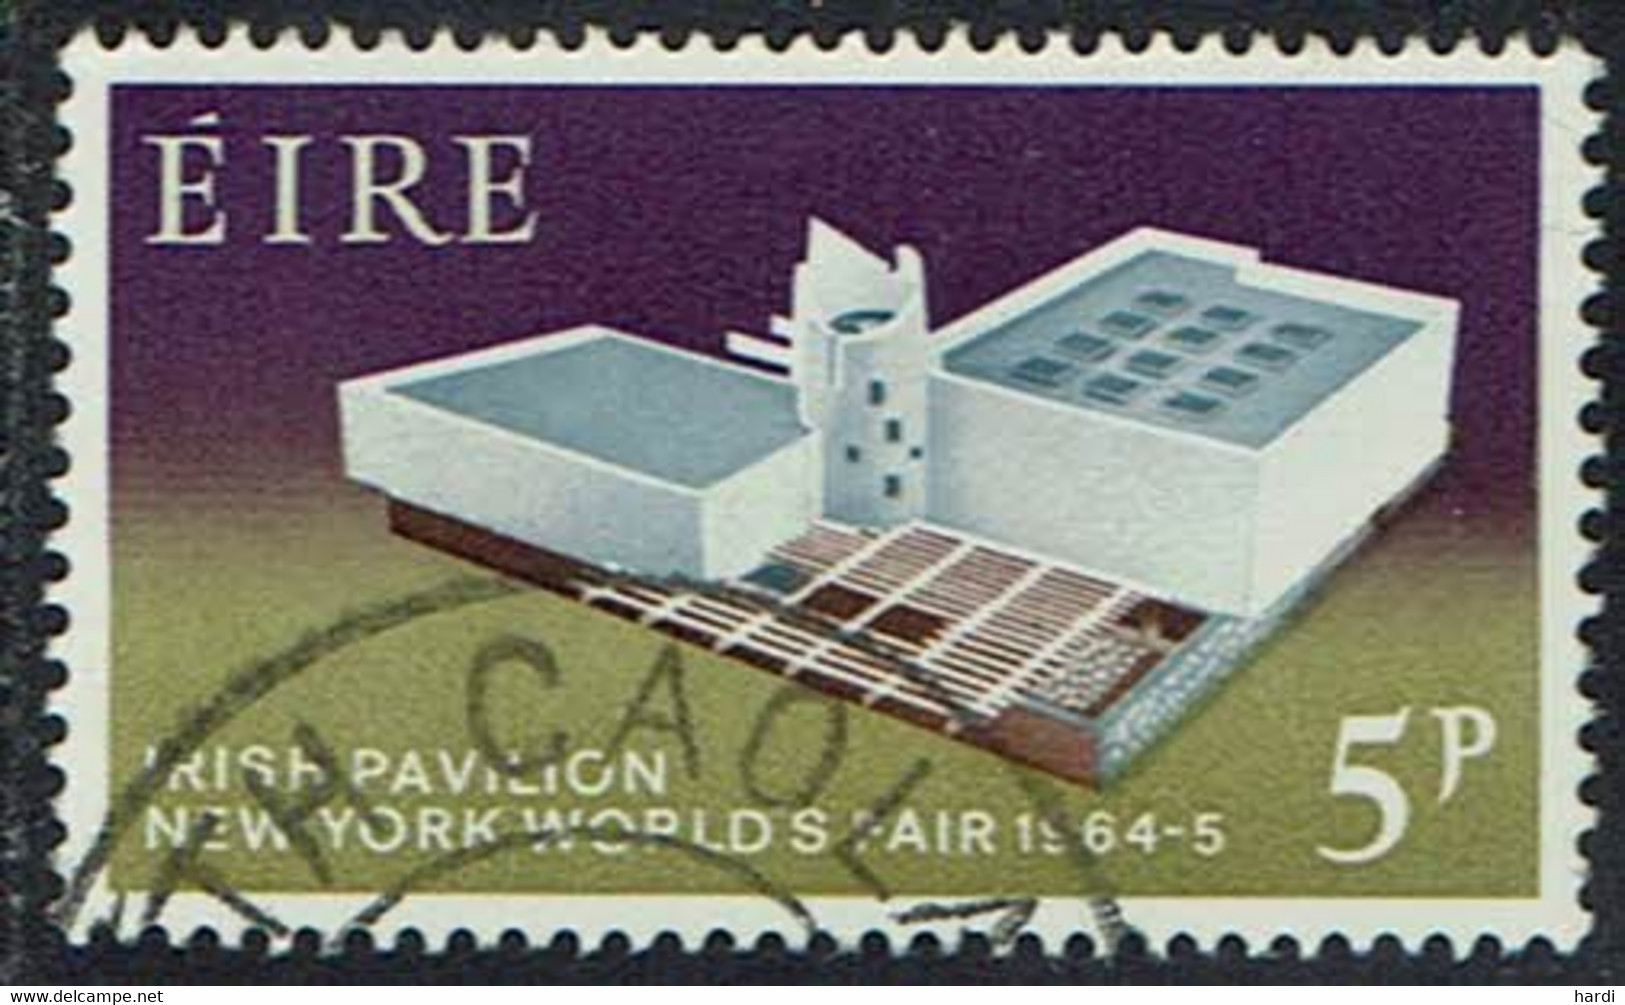 Irland 1964, MiNr 165, Gestempelt - Usati